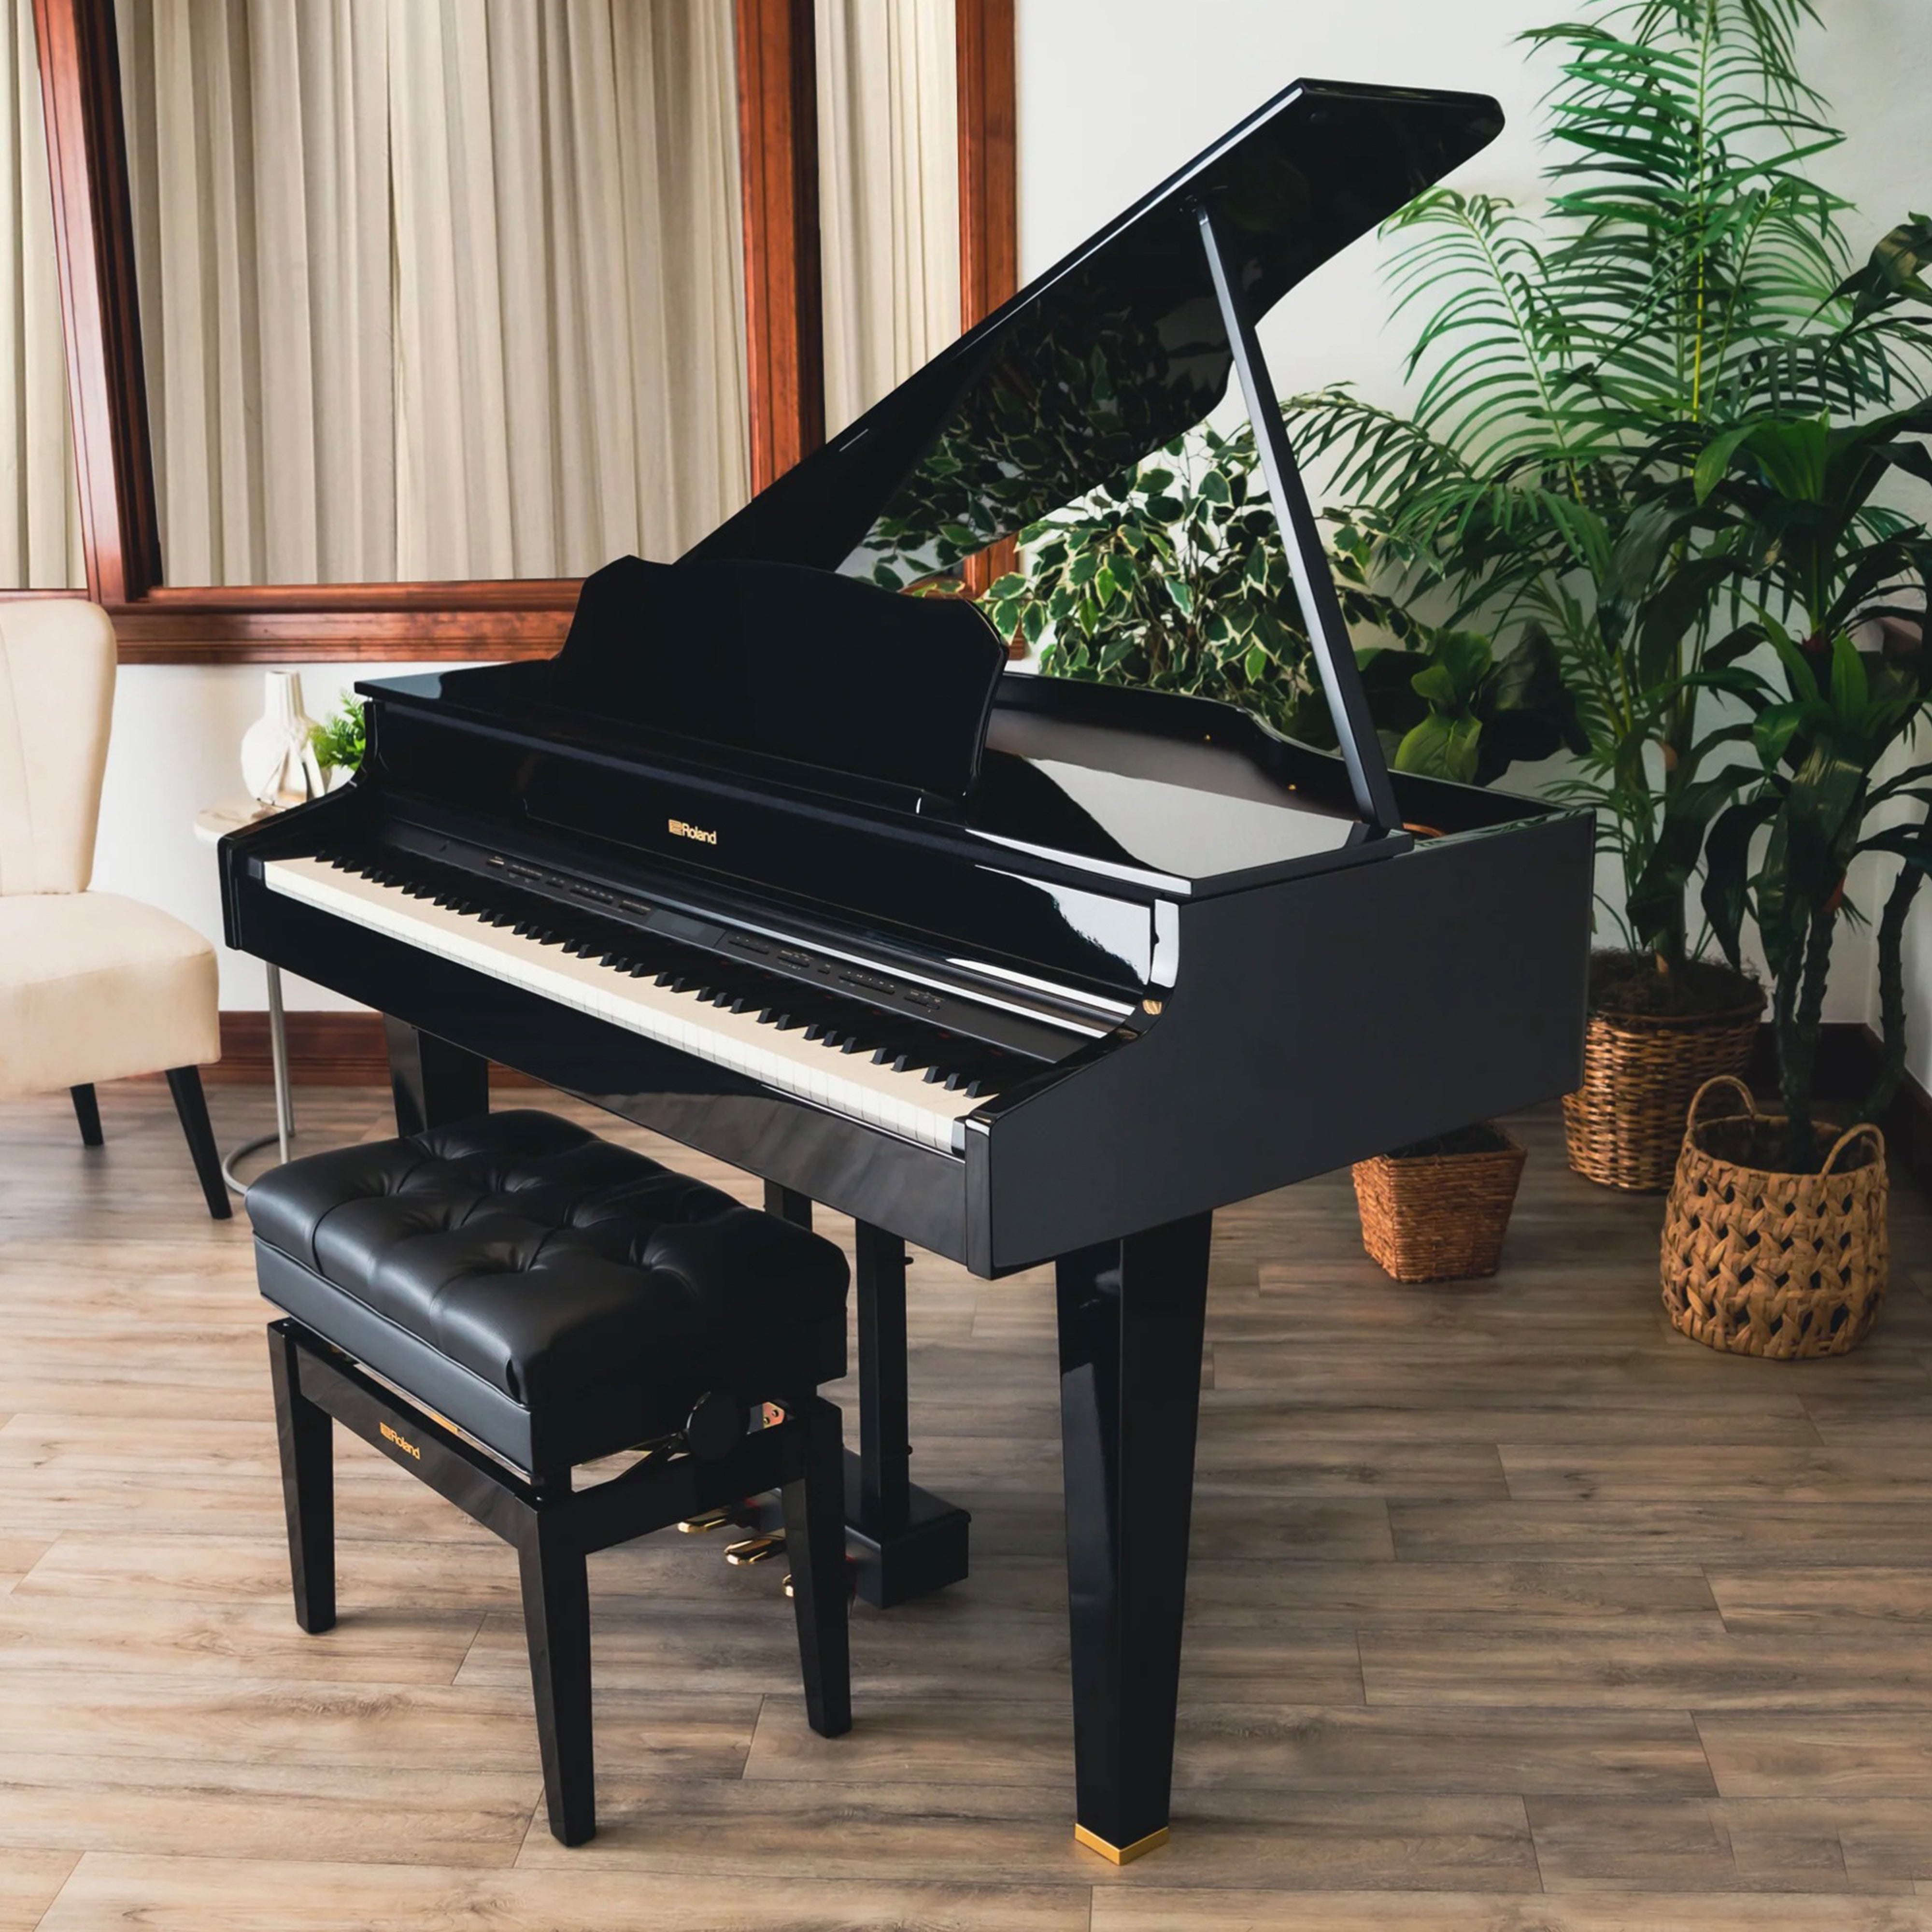 Roland GP607 Digital Grand Piano - Polished Ebony - in a stylish music room